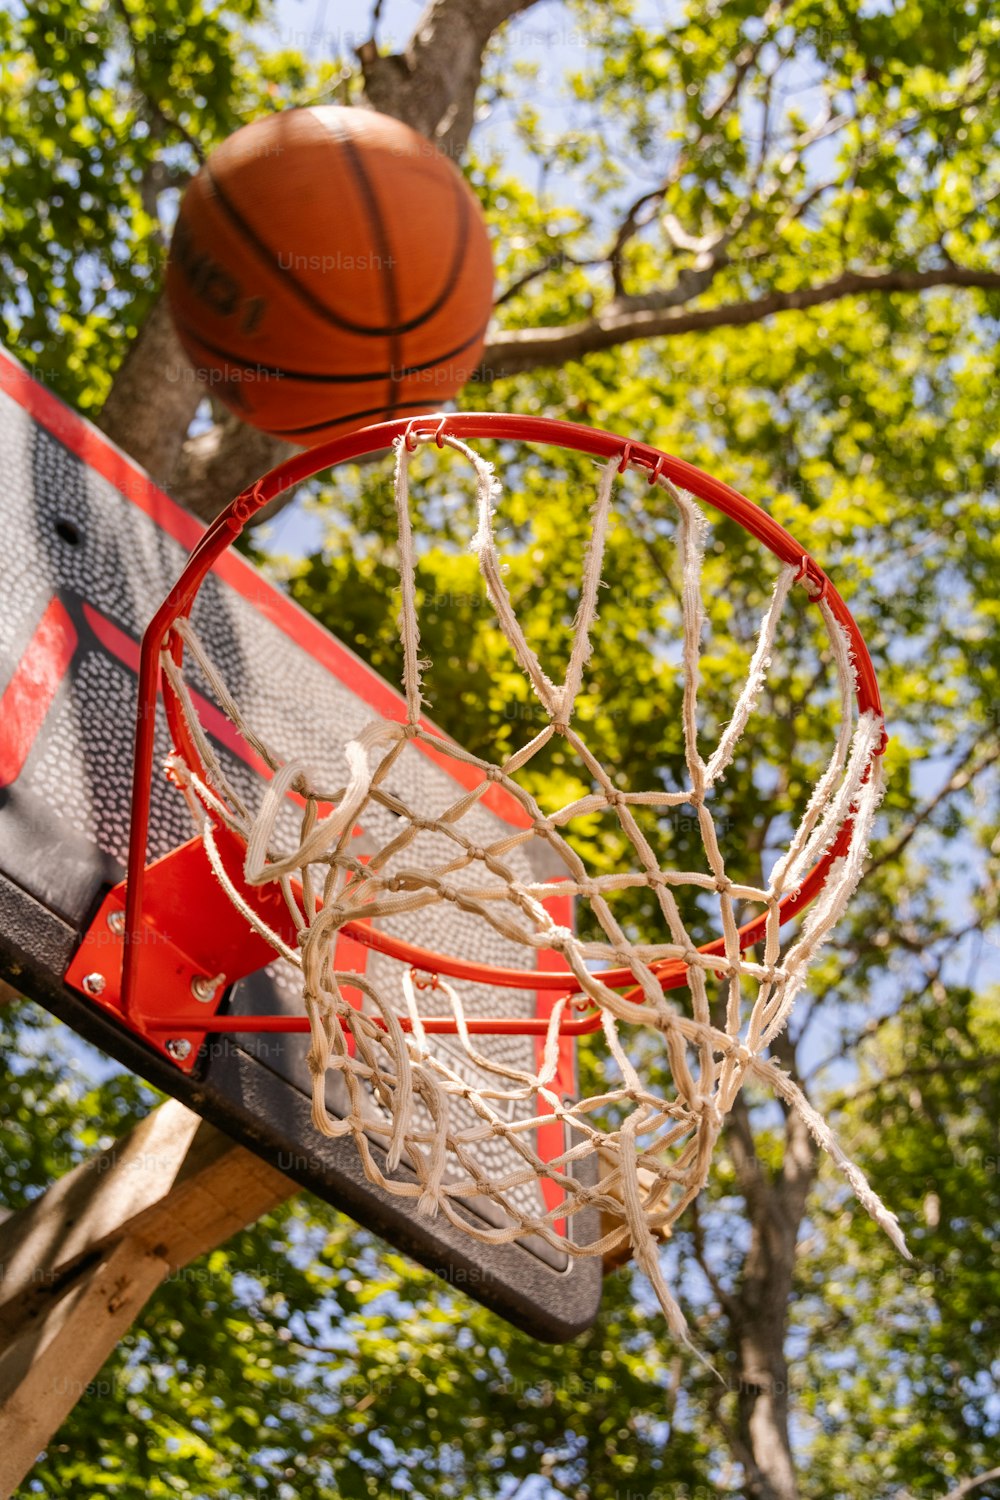 Una pelota de baloncesto atravesando la red de un aro de baloncesto